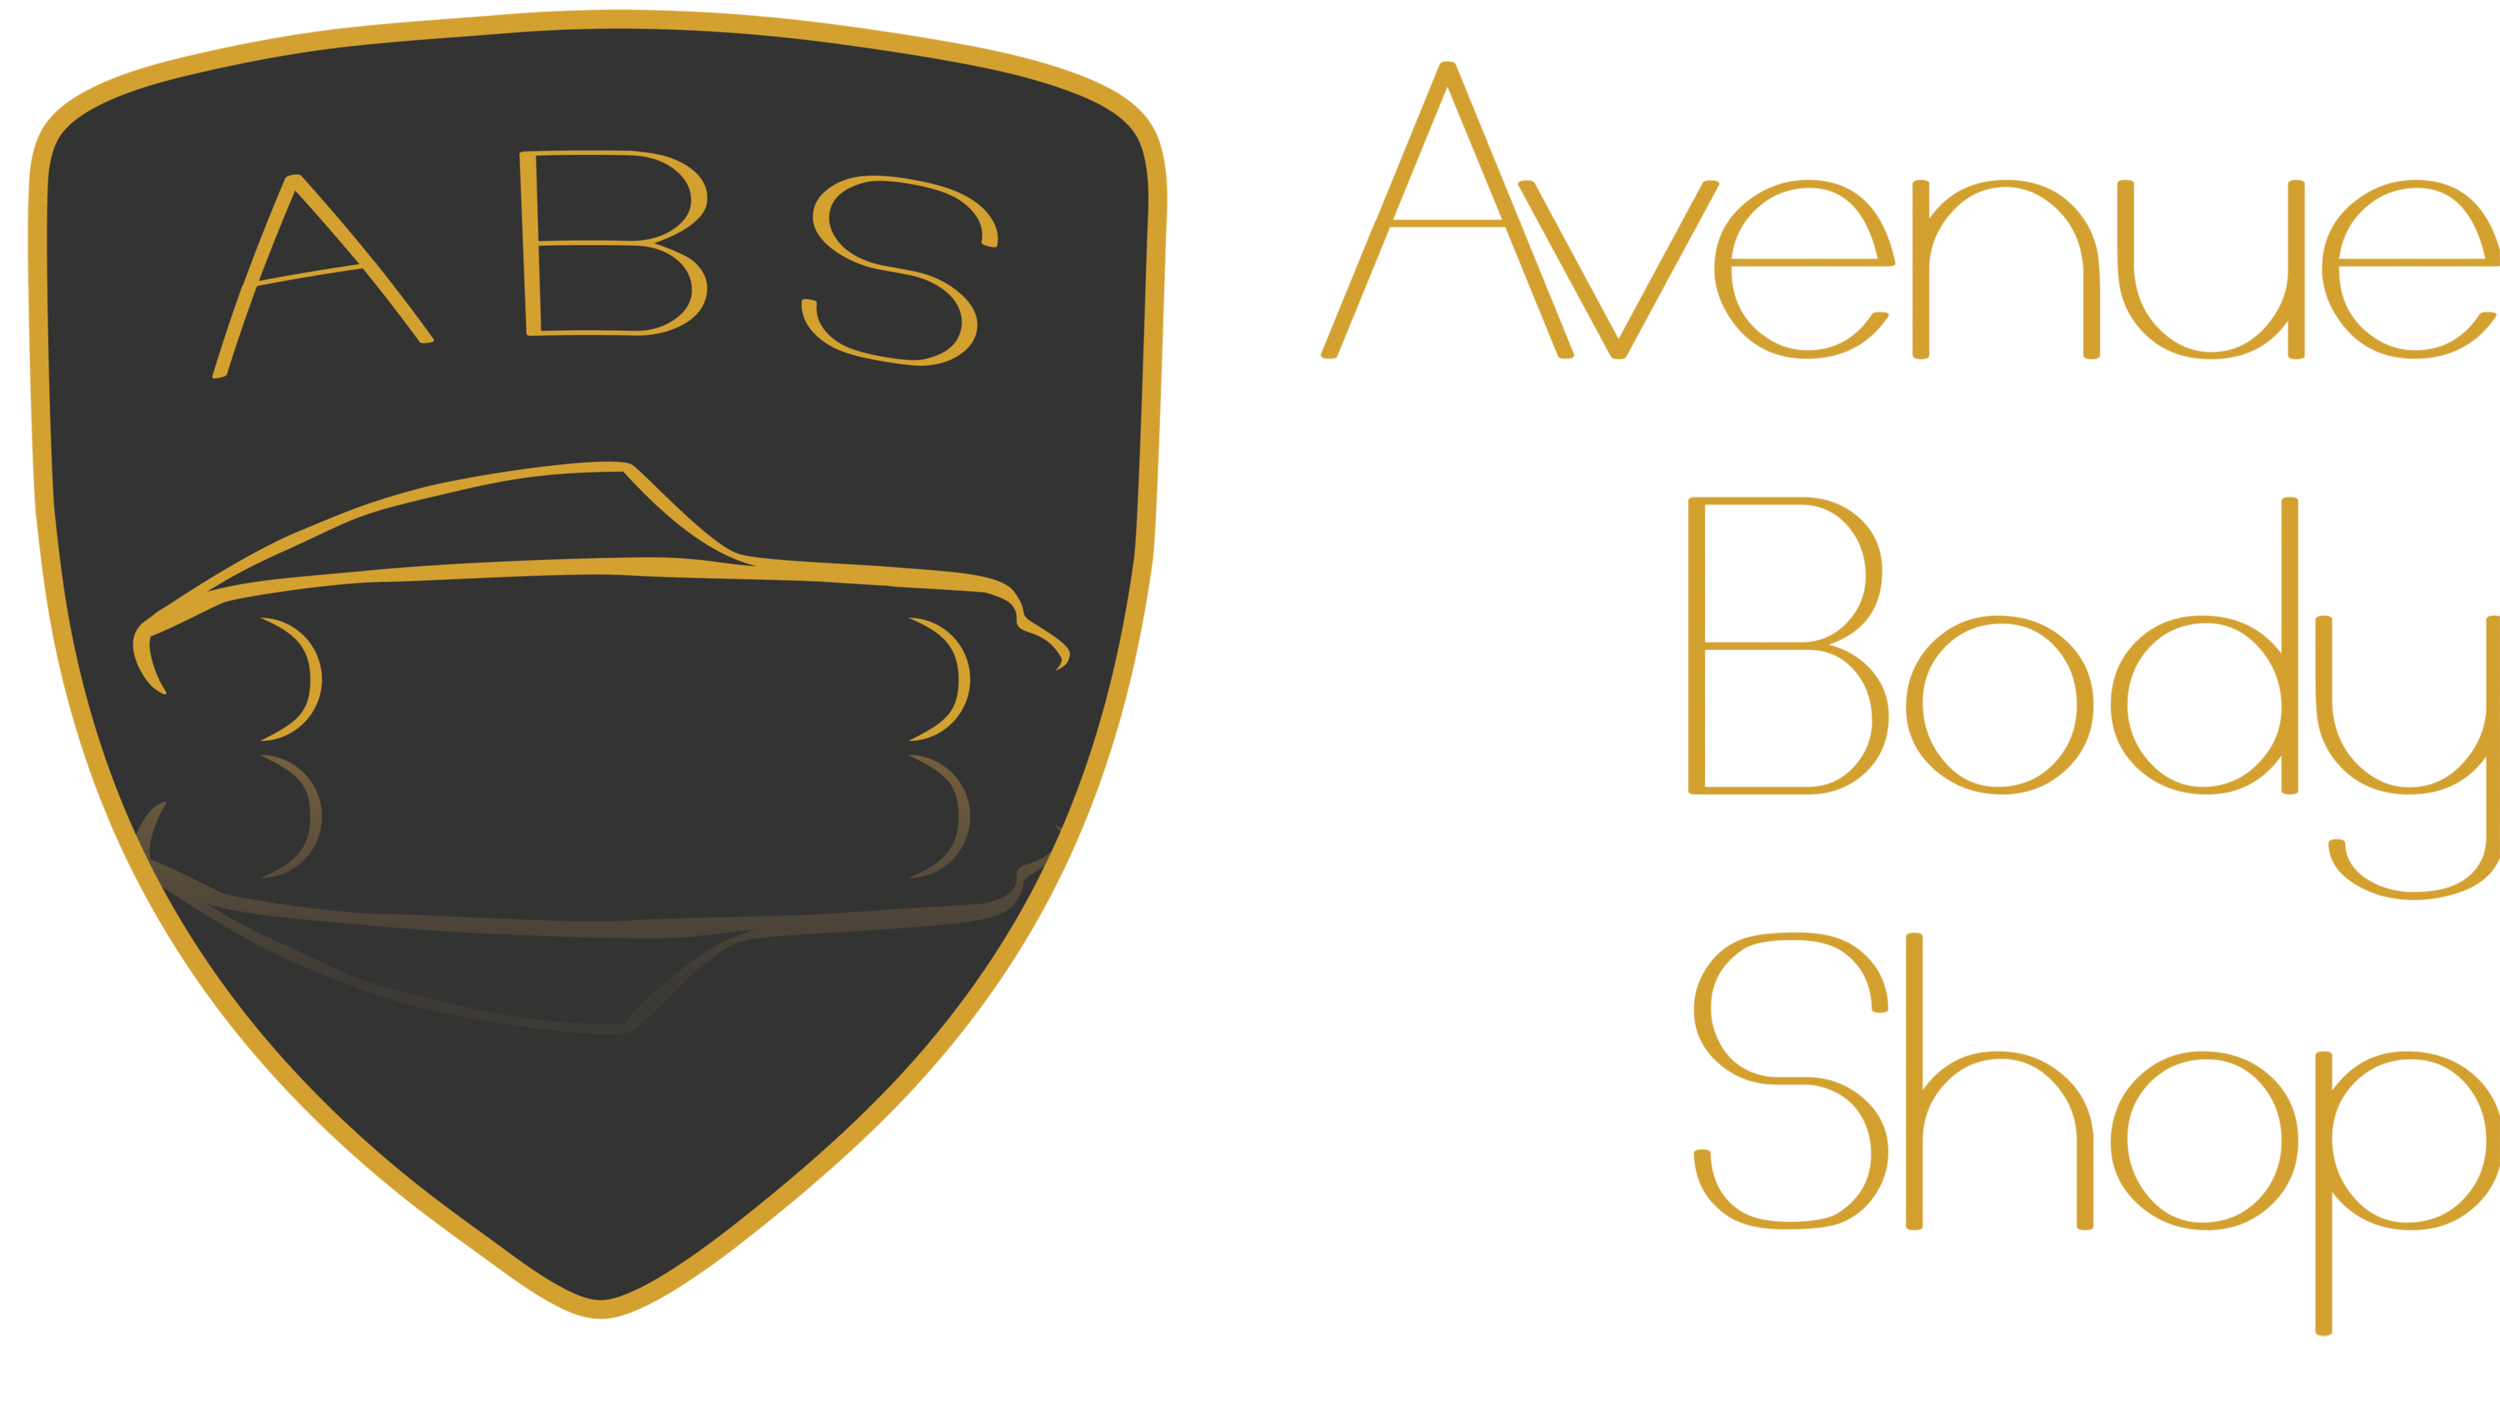 Avenue Body Shop